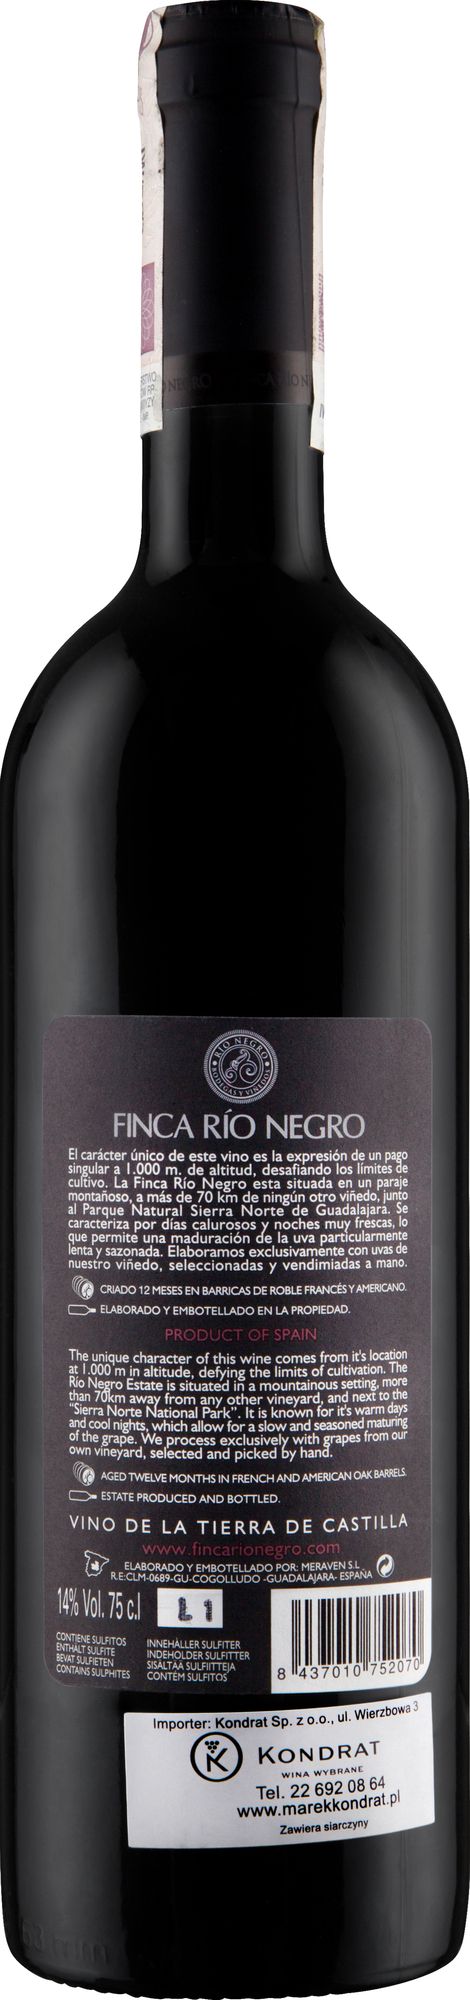 Wino Finca Rio Negro Tinto Castilla VdlT